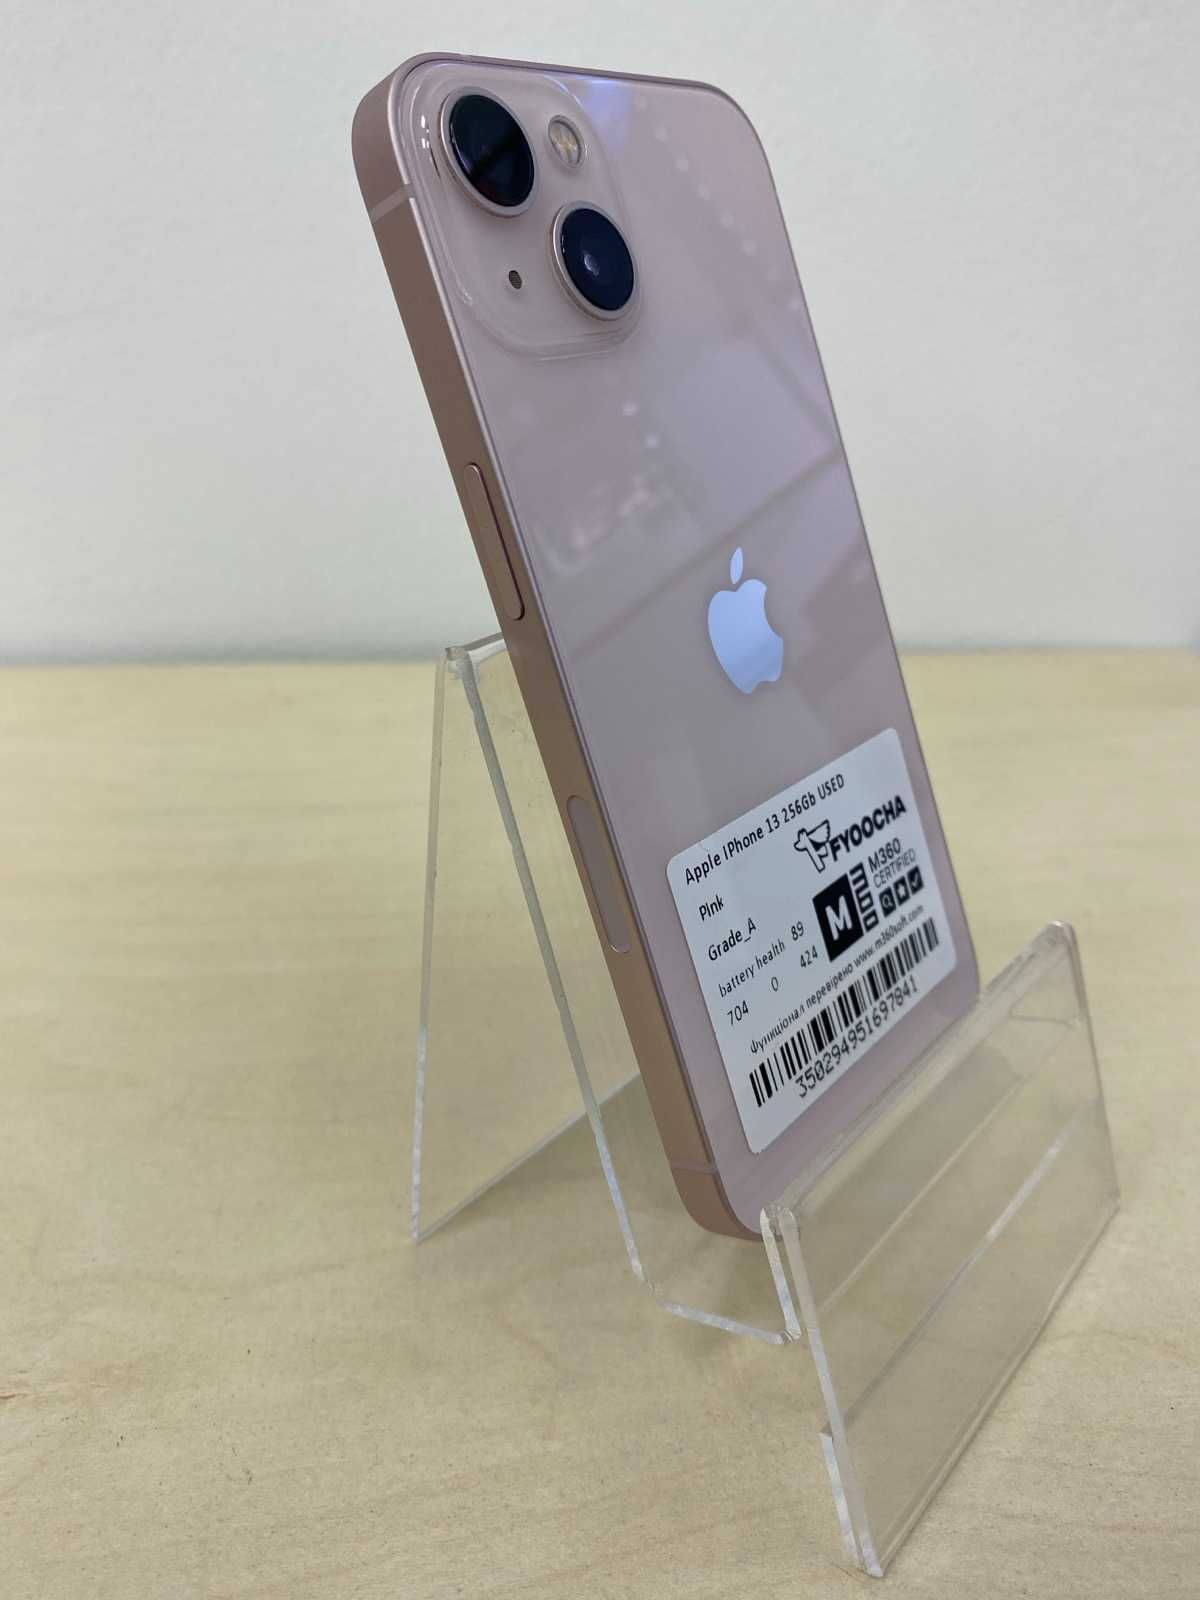 Apple iPhone 13 256Gb Pink